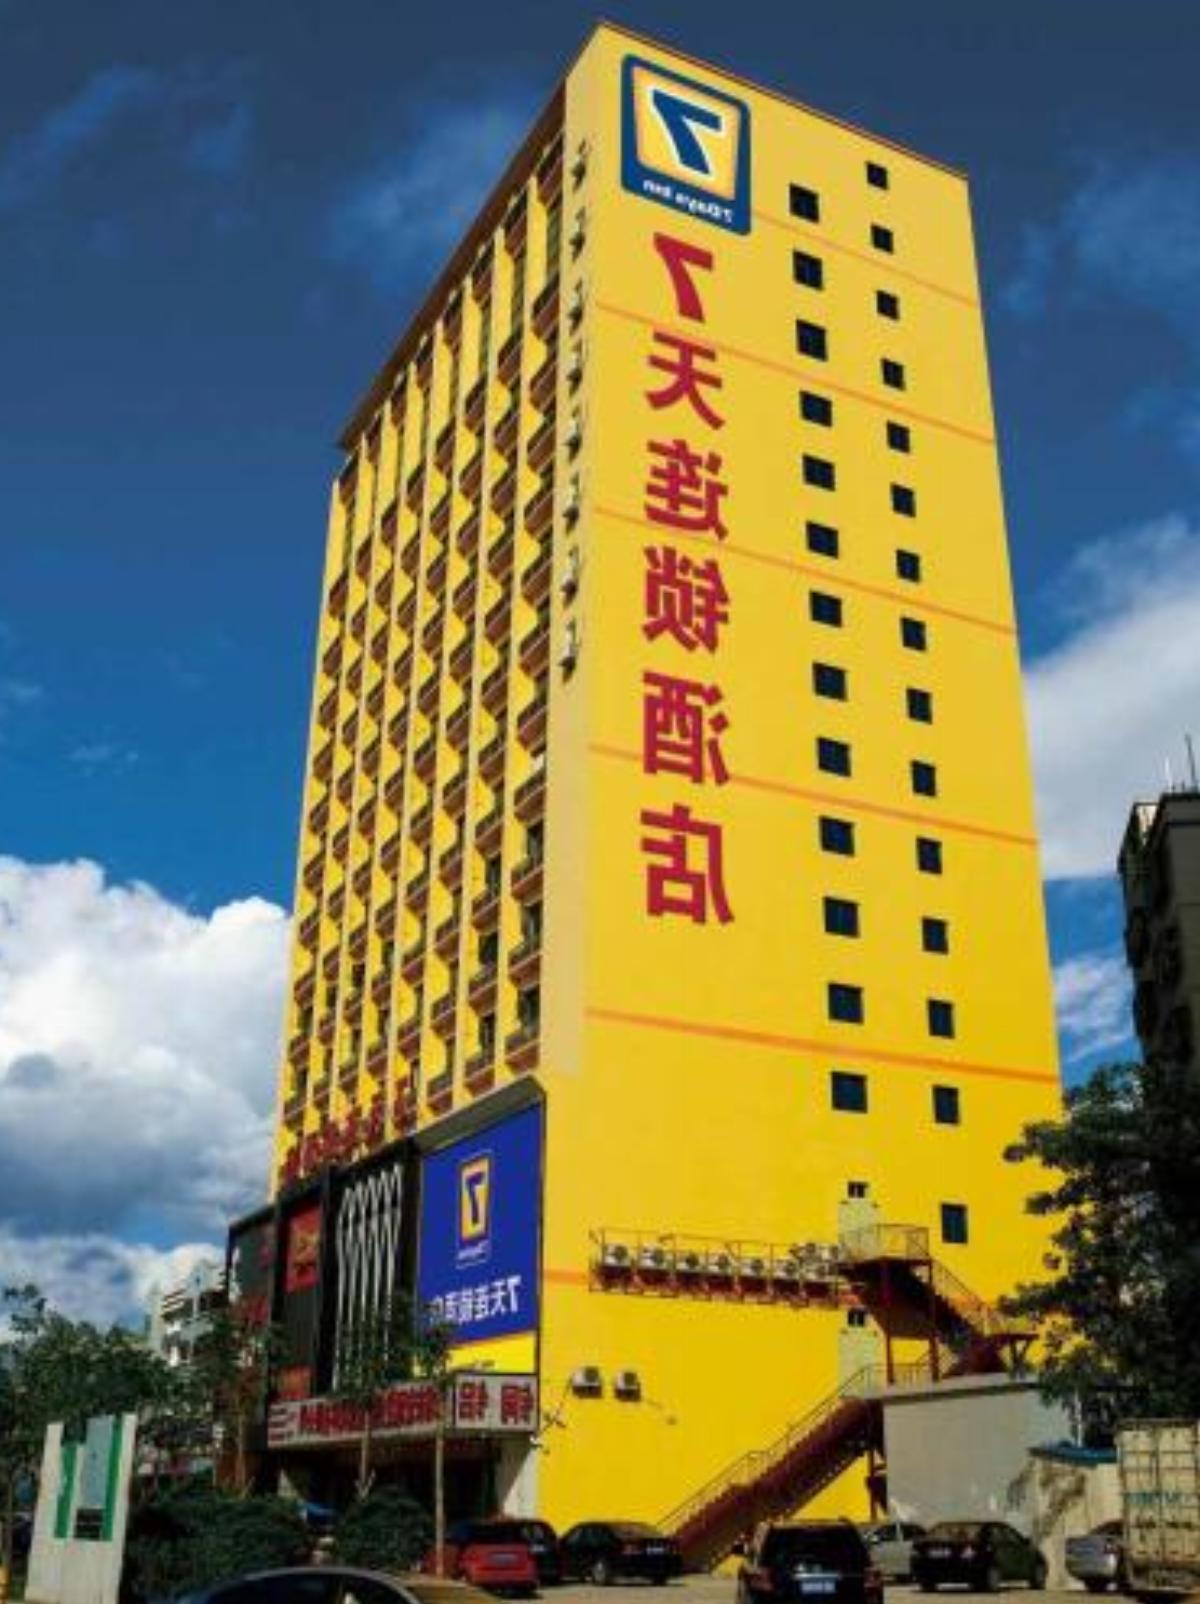 7Days Inn Guiyang Guanshui Road 2nd Branch Hotel Guiyang China